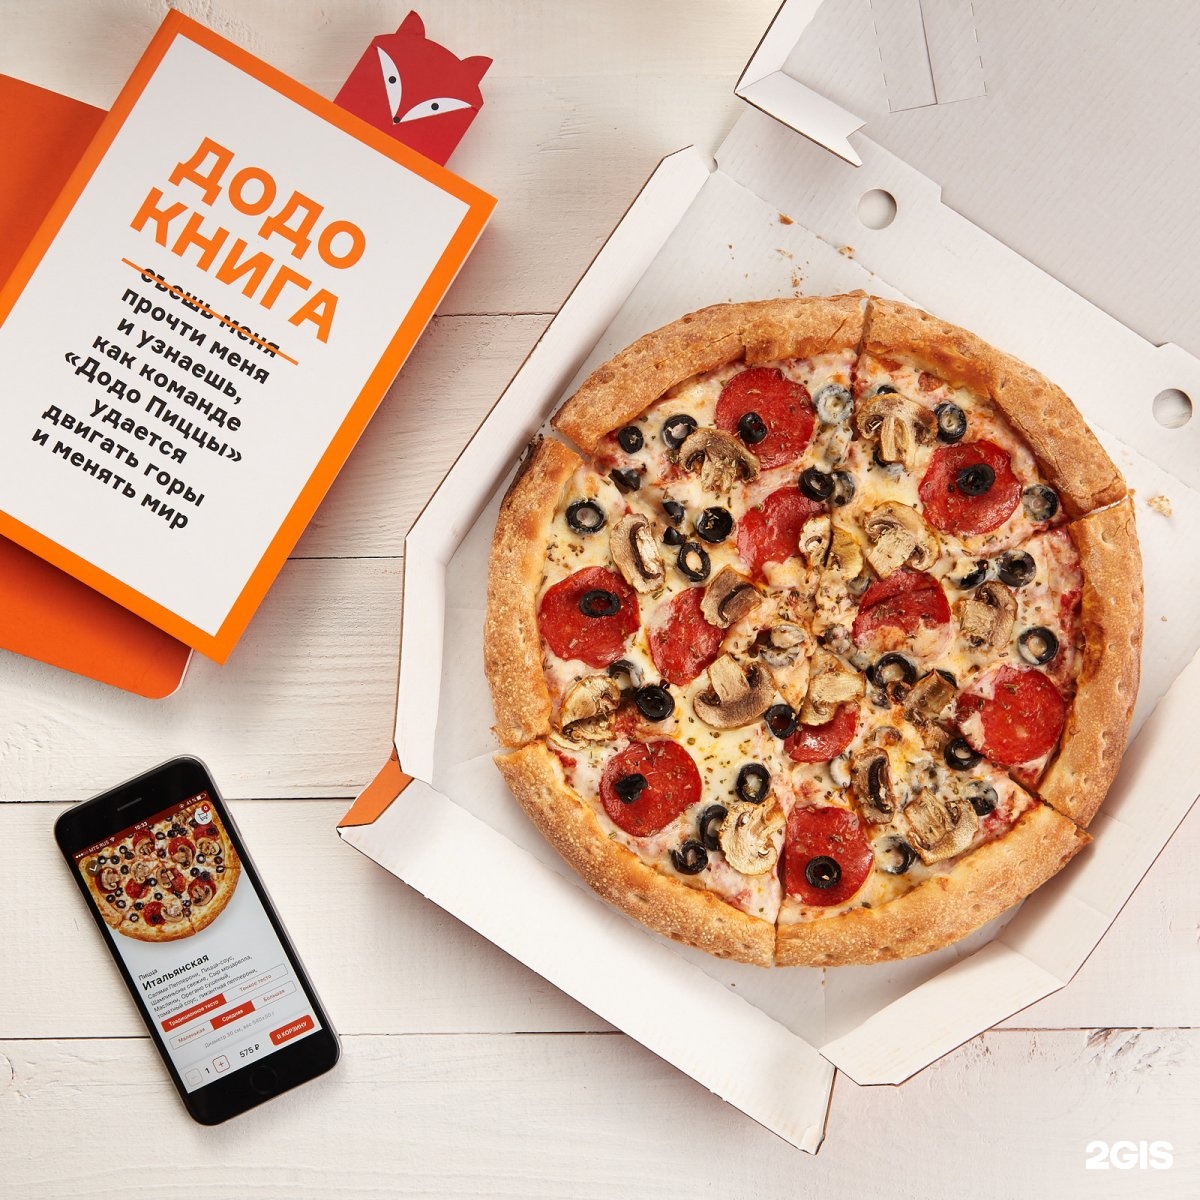 Додо номер телефона для заказа. Додо пицца. Реклама пиццы. Реклама на пиццу в пиццерии. Додо пицца реклама.